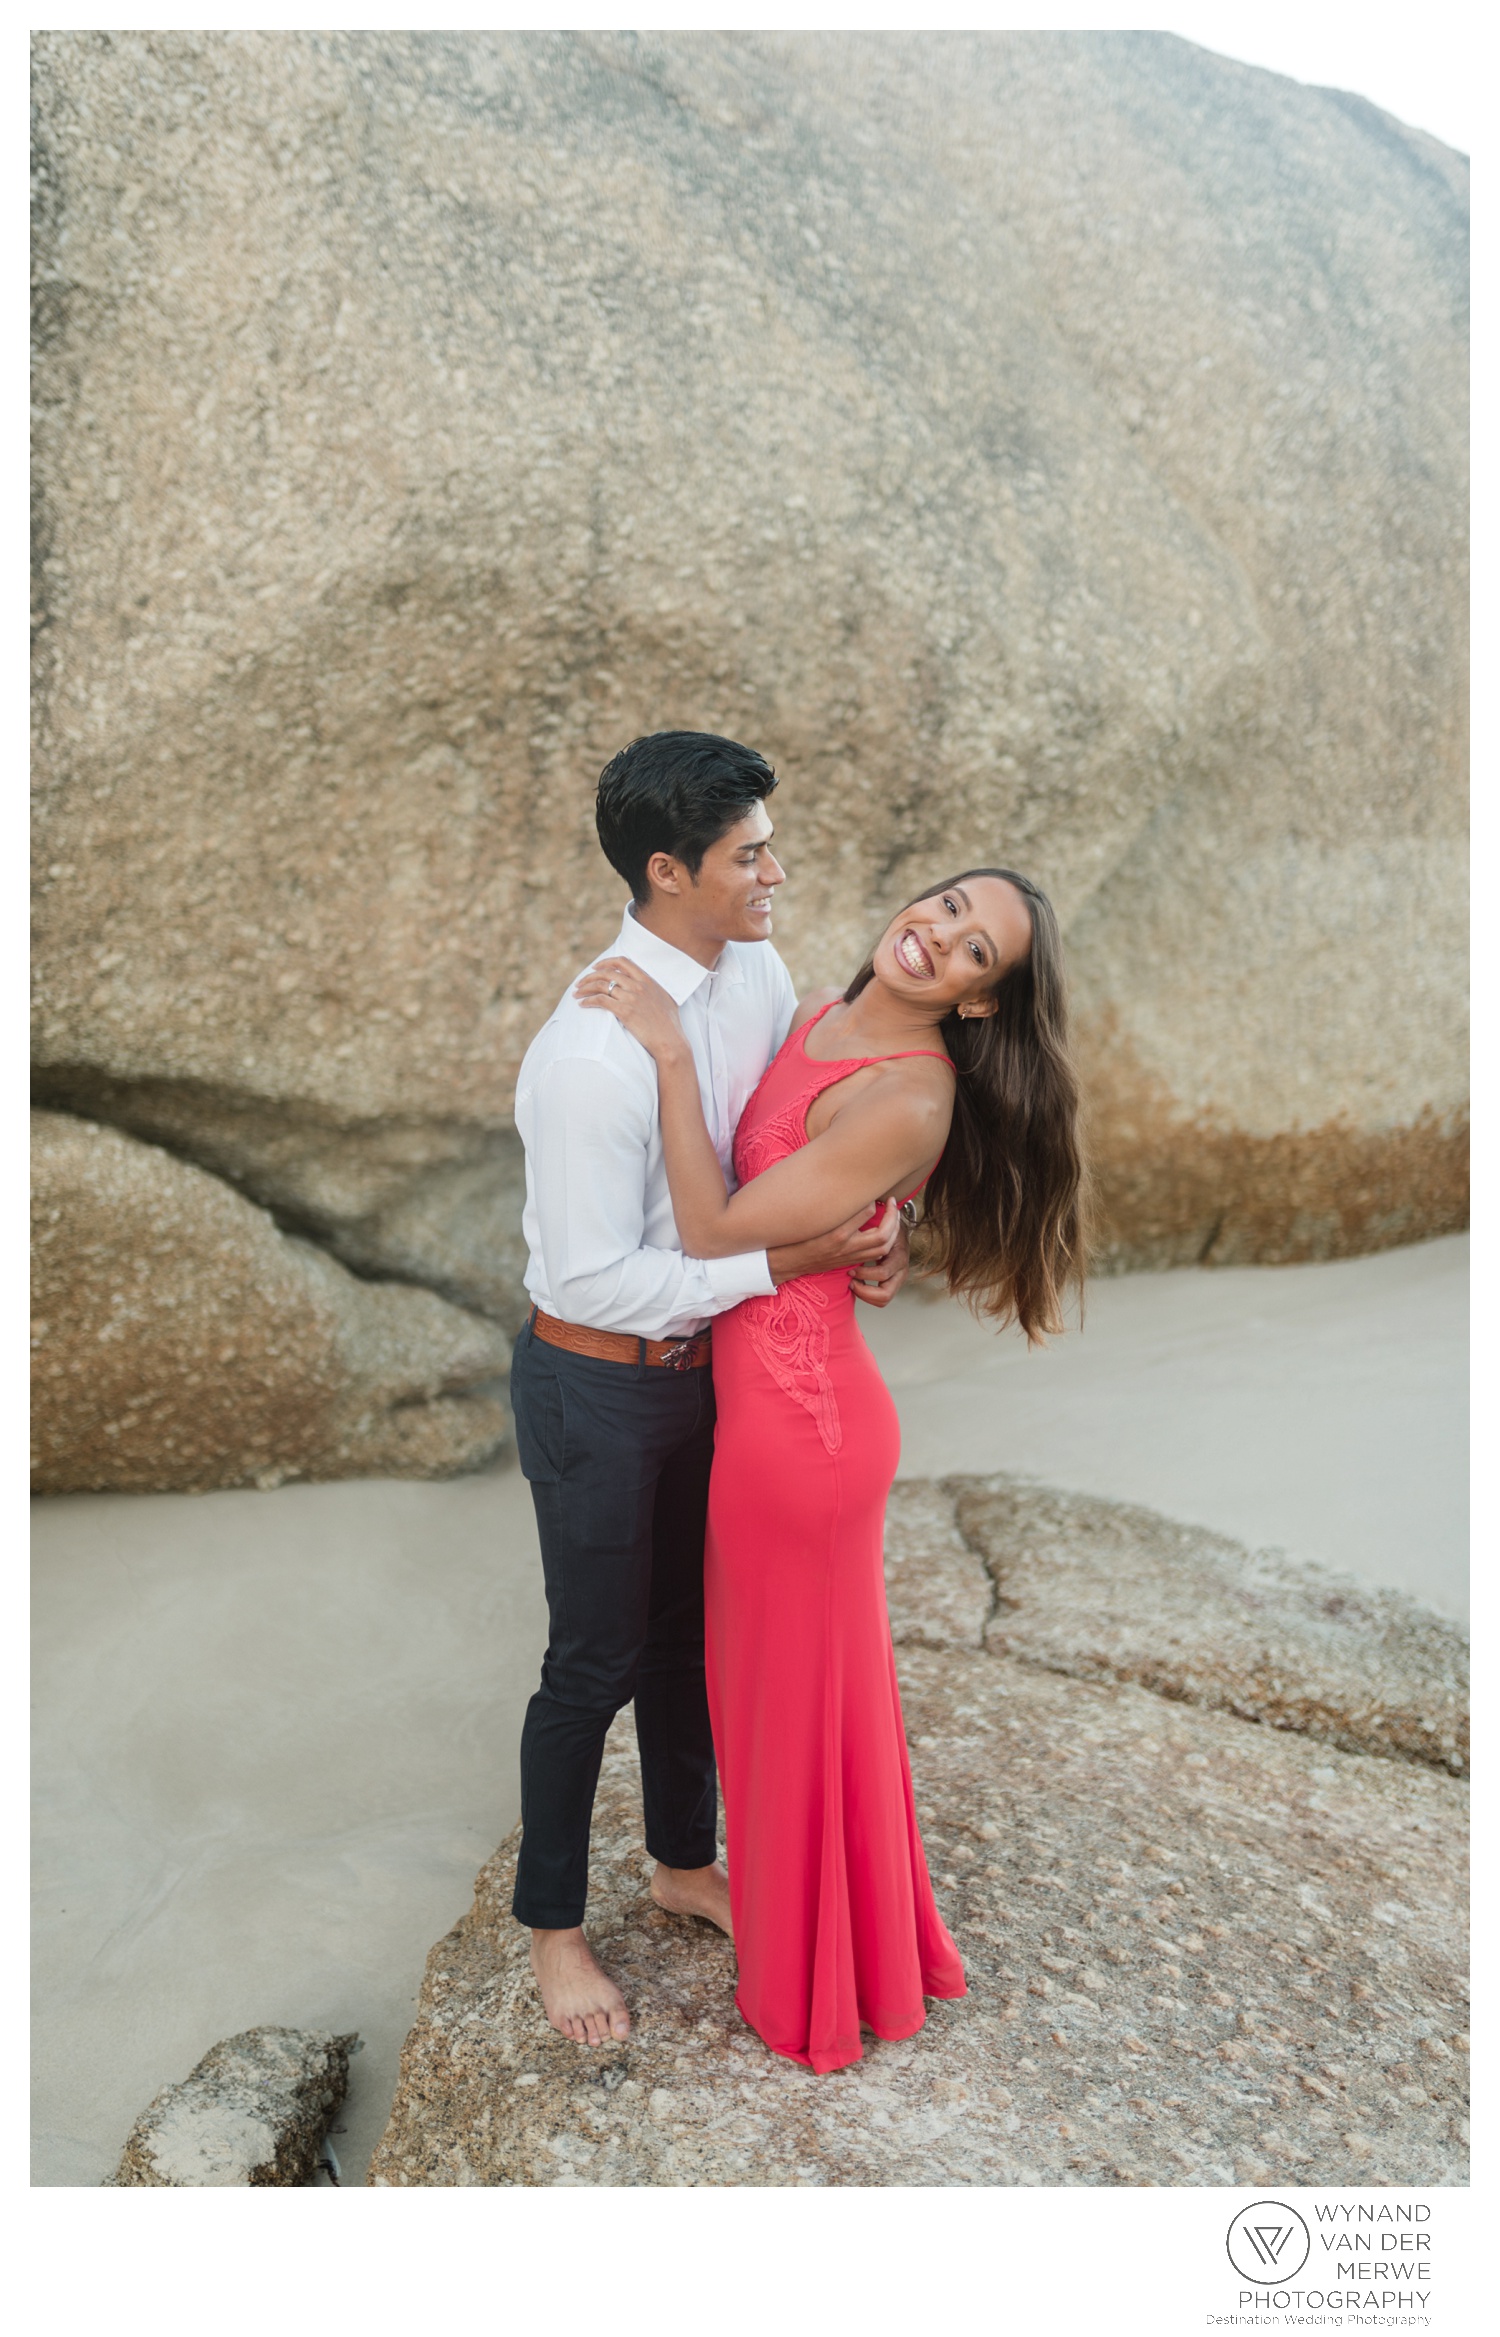 WvdM_engagementshoot_engaged_couple_prewedding_llandudno_cliftonbeach_beach_formal_southafrica_weddingphotographer_greernicolas-26.jpg